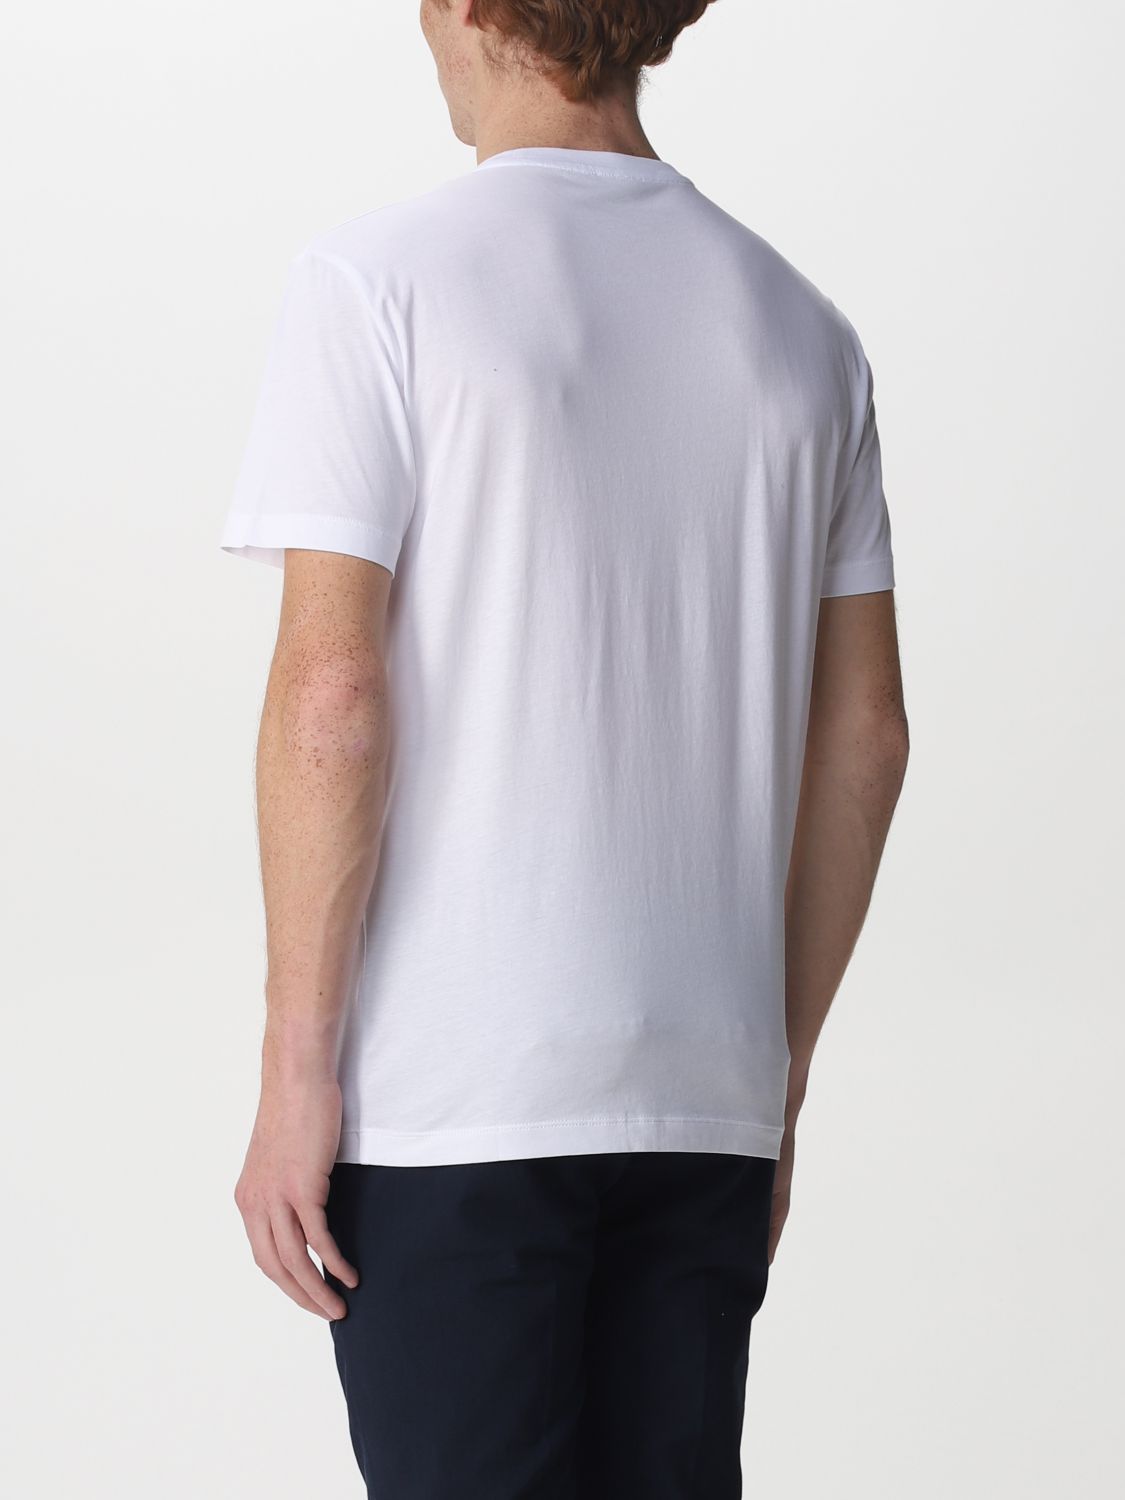 Ea7 Outlet: Gold Label t-shirt in cotton - White | Ea7 t-shirt ...